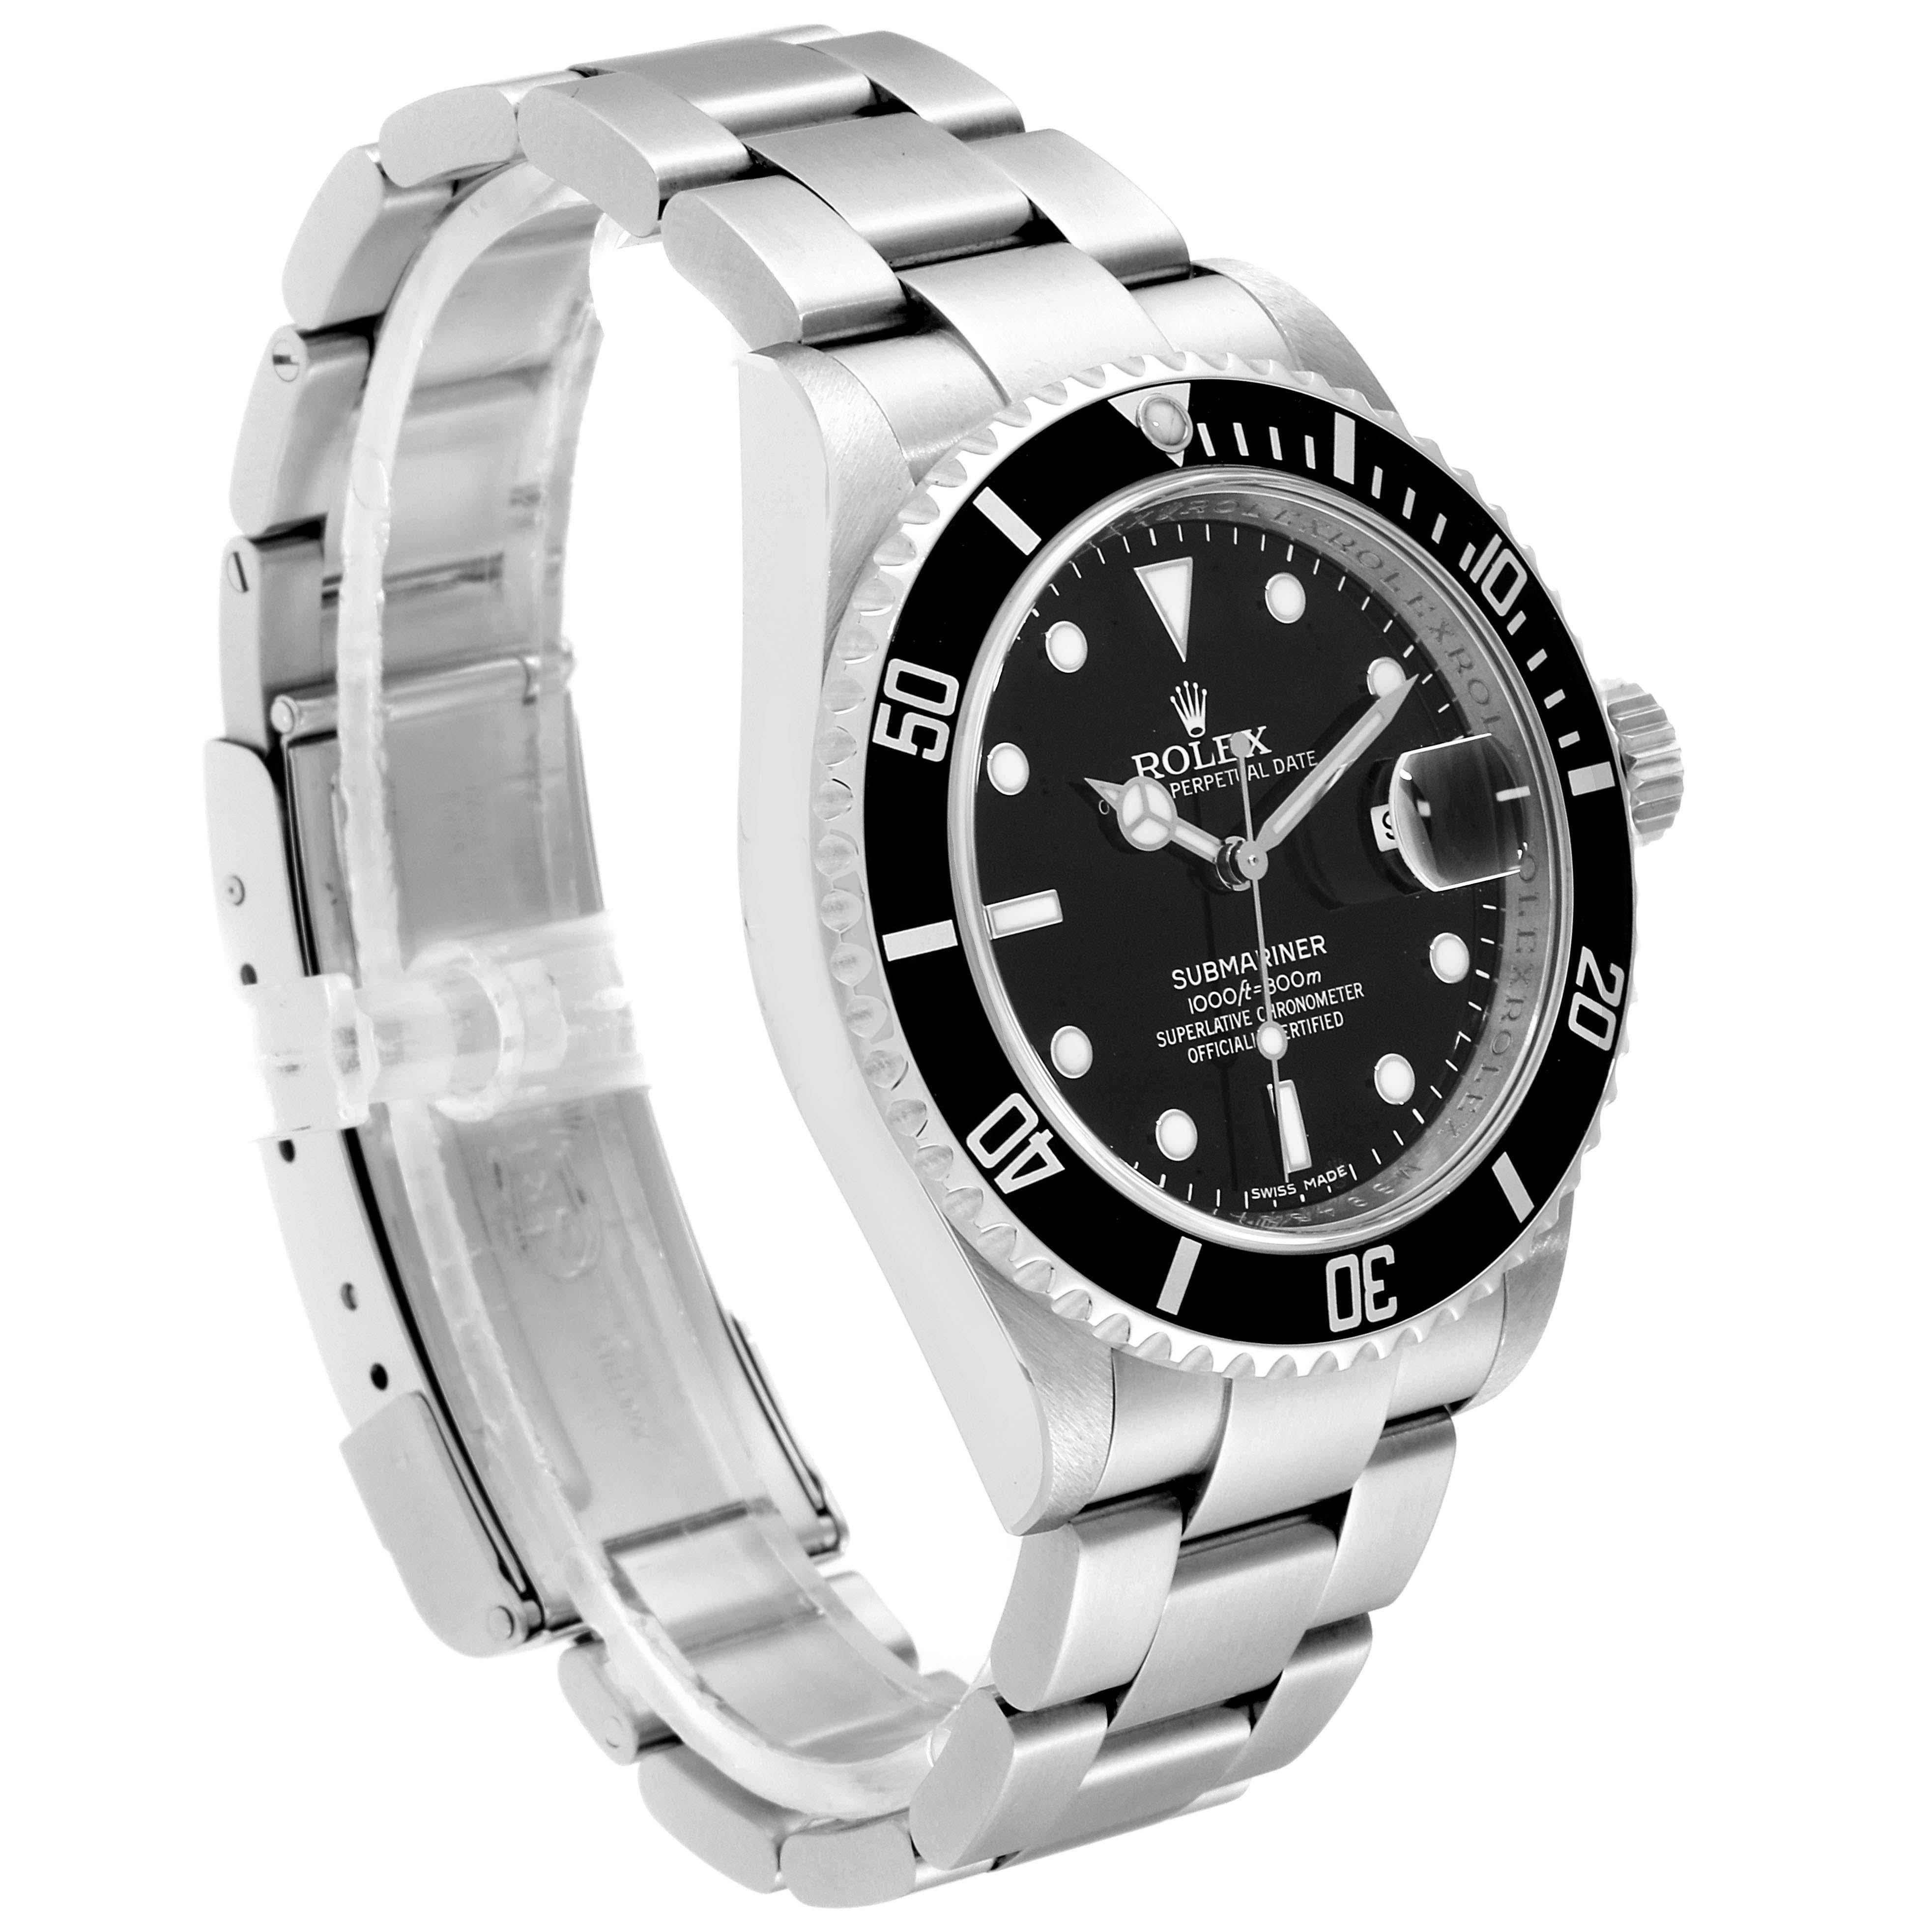 Rolex Submariner Date Stainless Steel Men's Watch 16610 Box Card 1